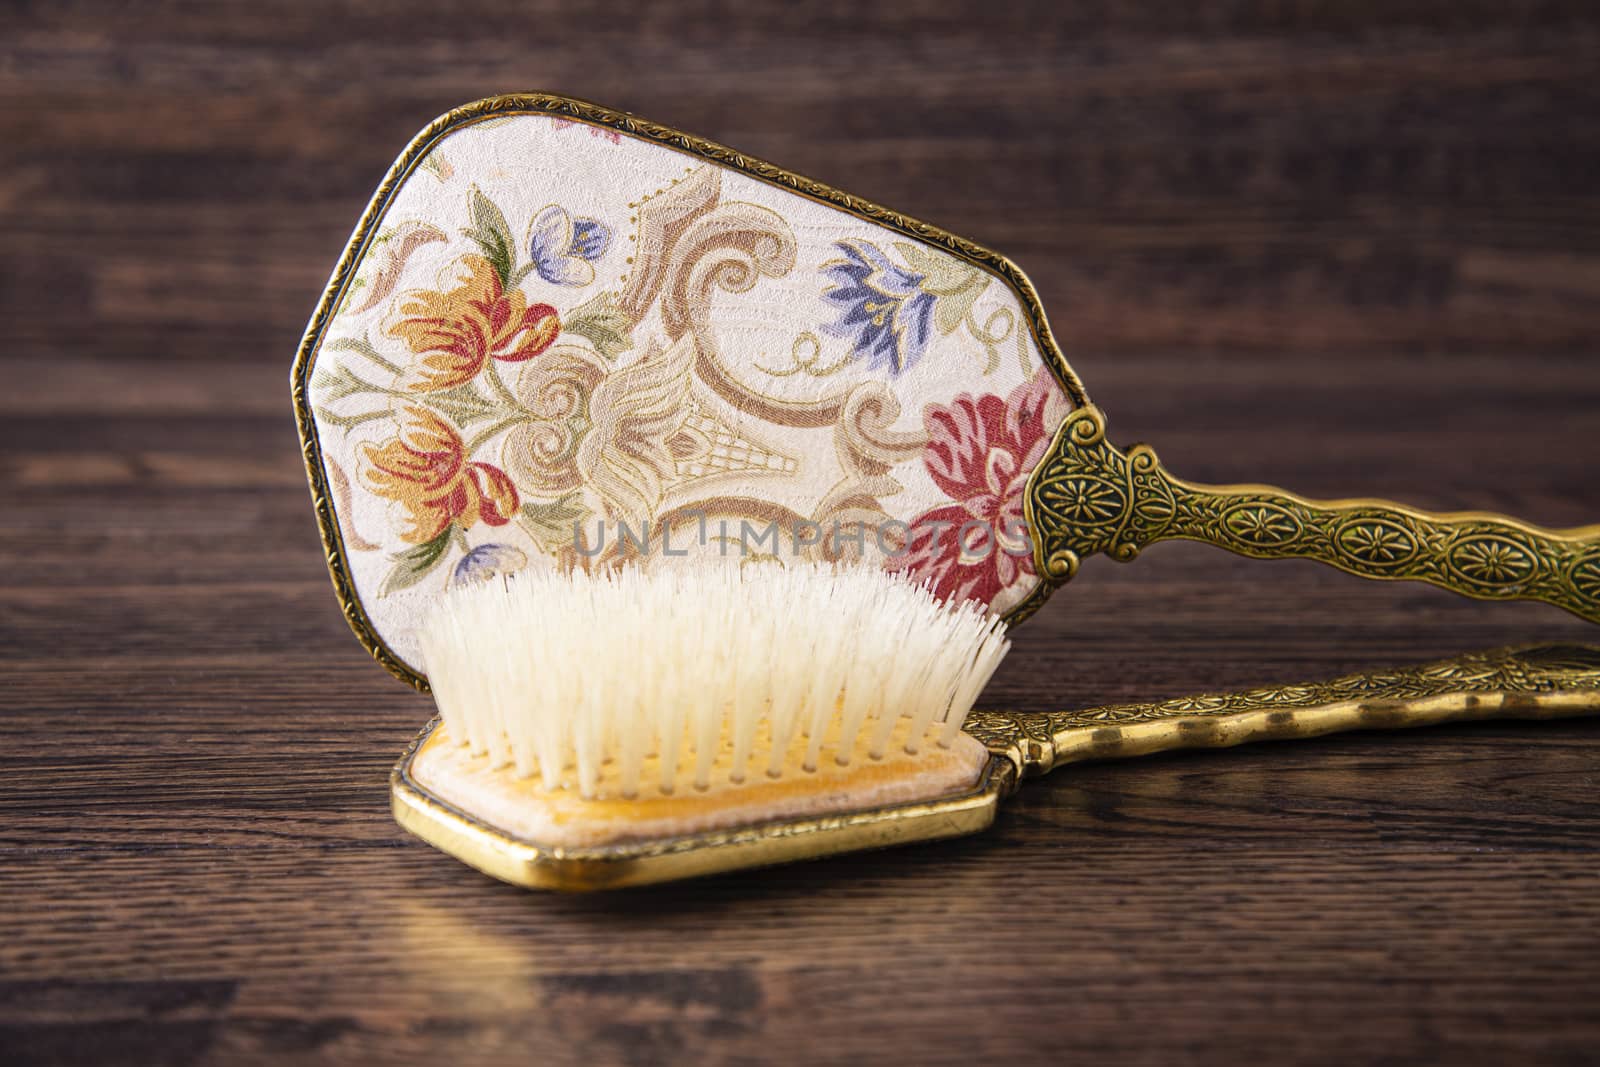 Vintage antique hand mirror and hair brush against dark wood background